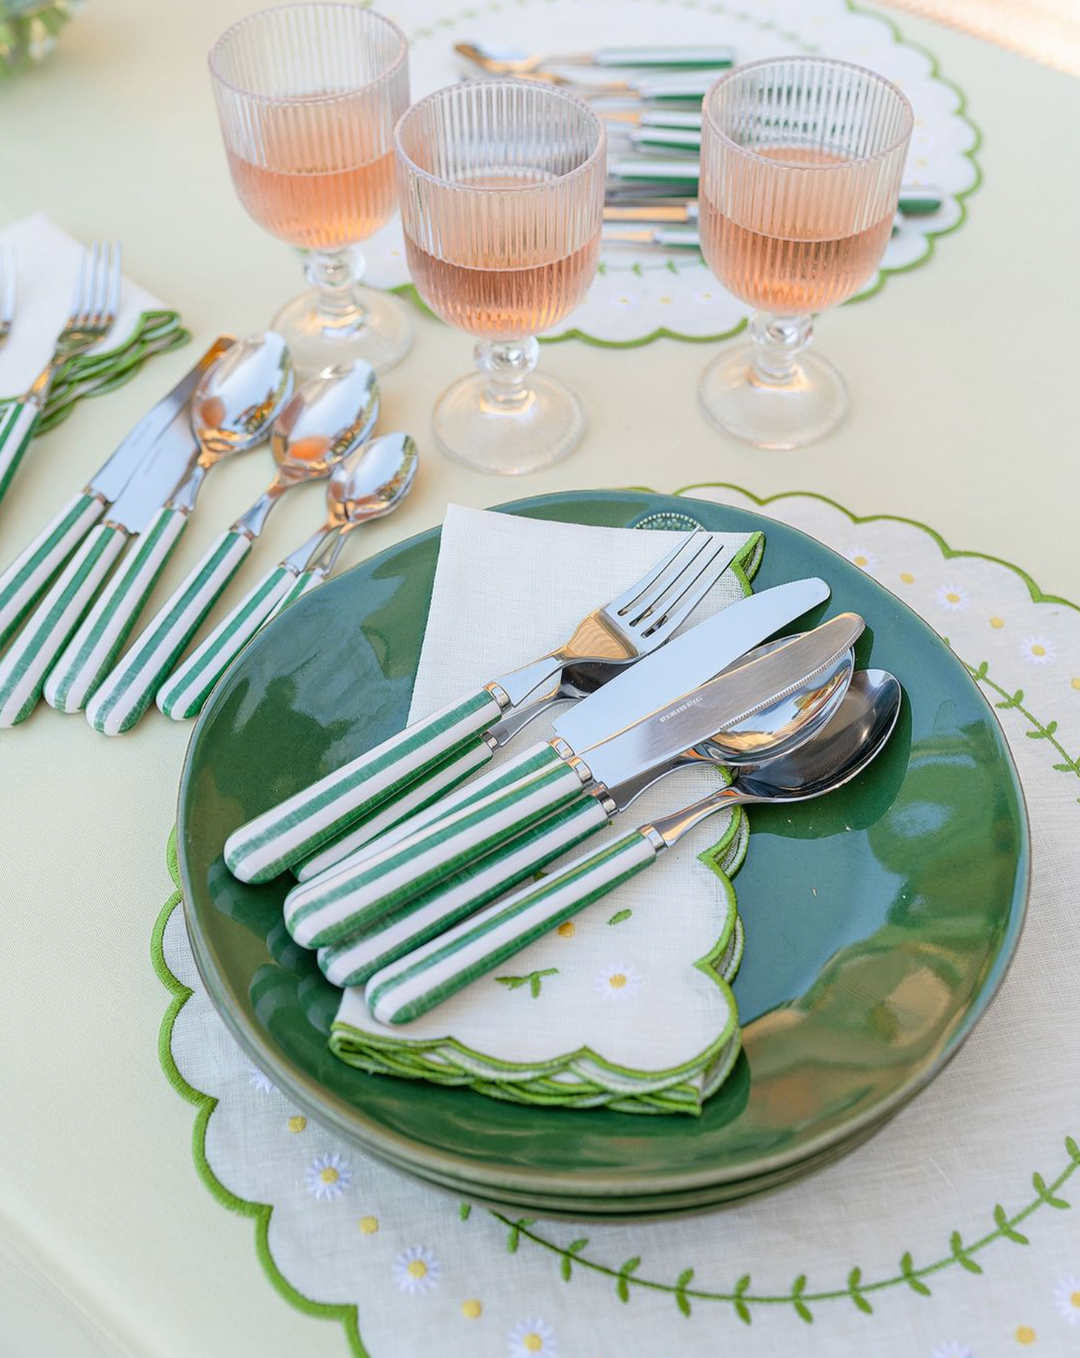 Cutlery Set - Green & Ivory